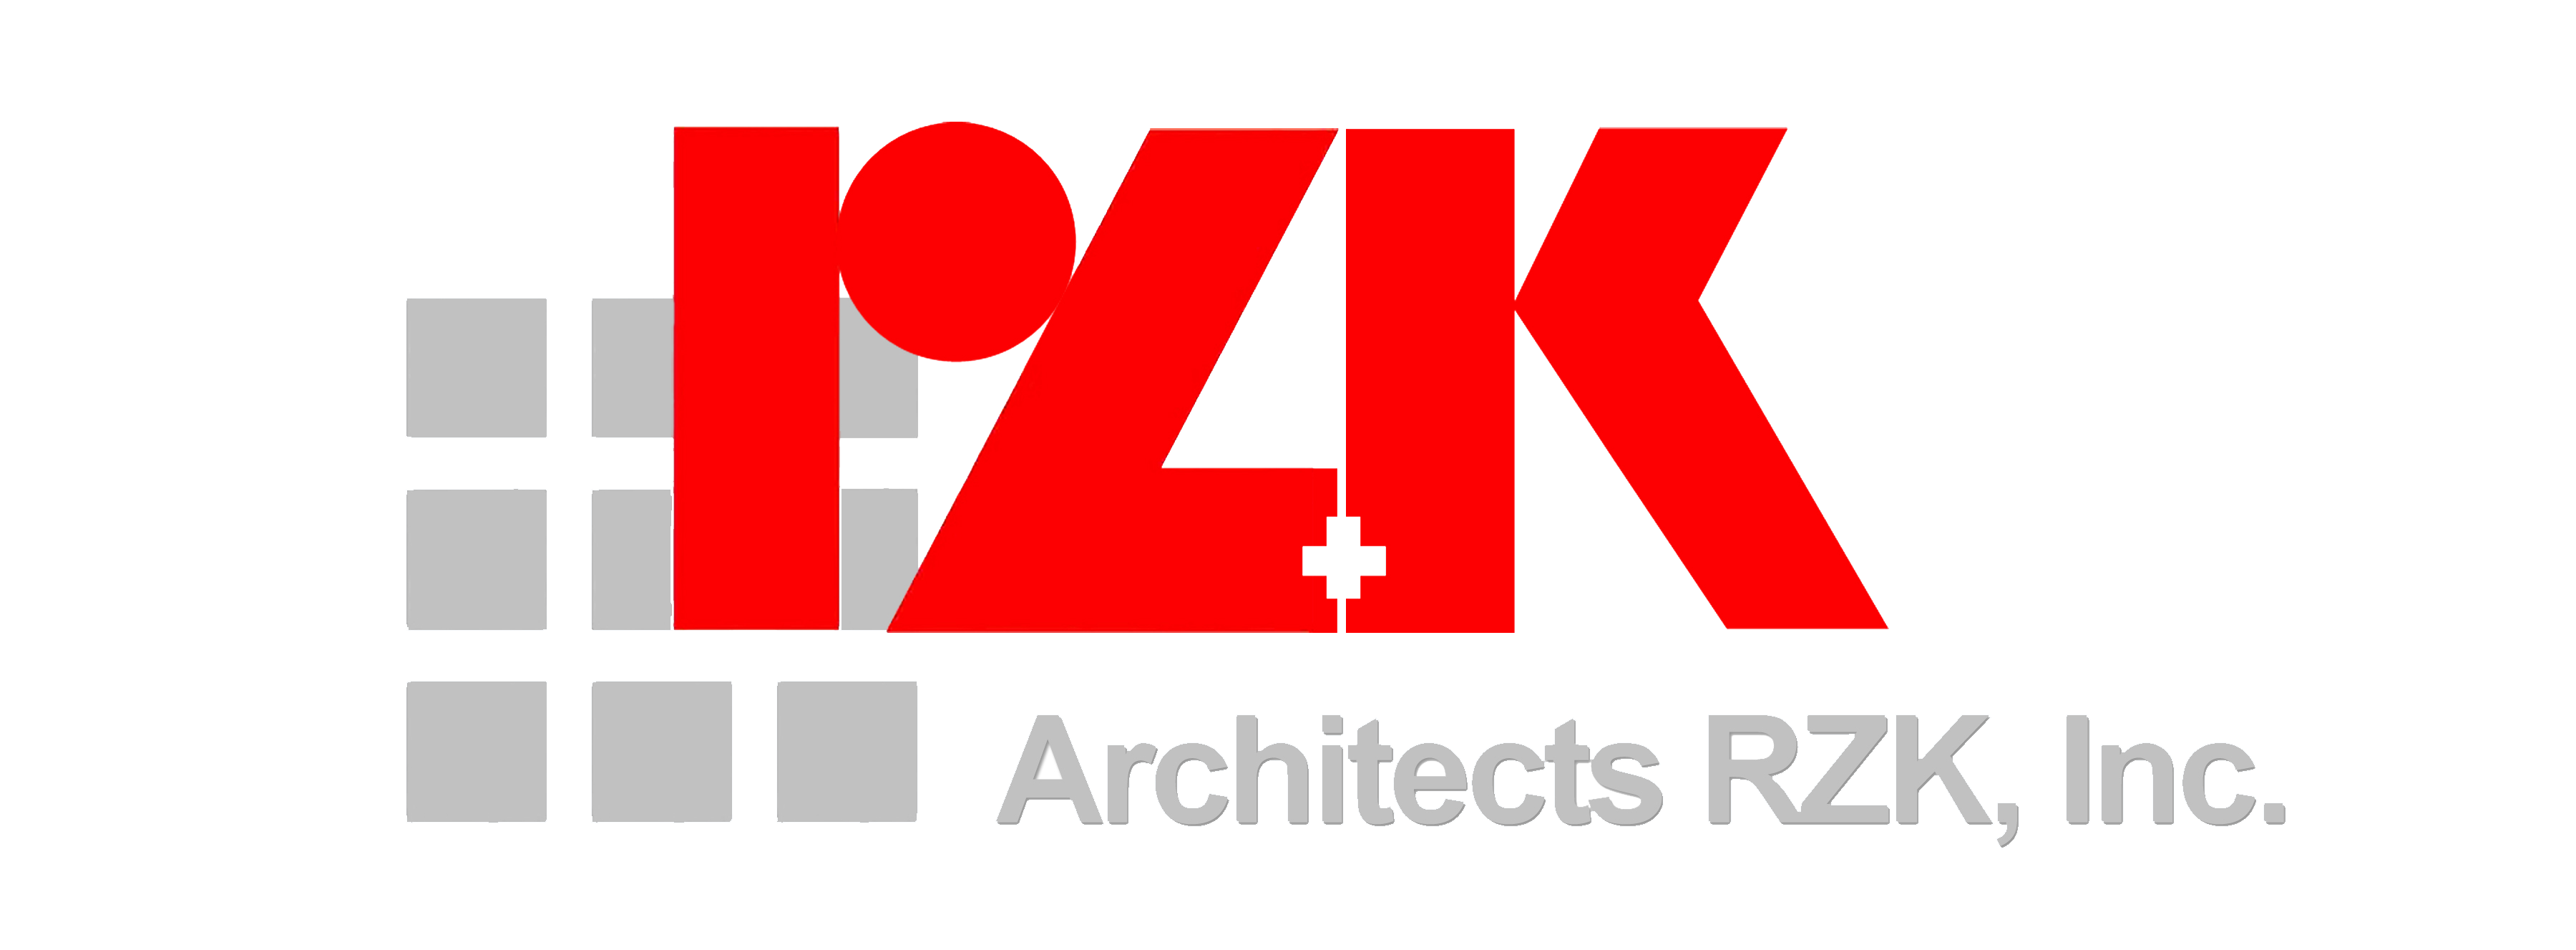 Architects RZK